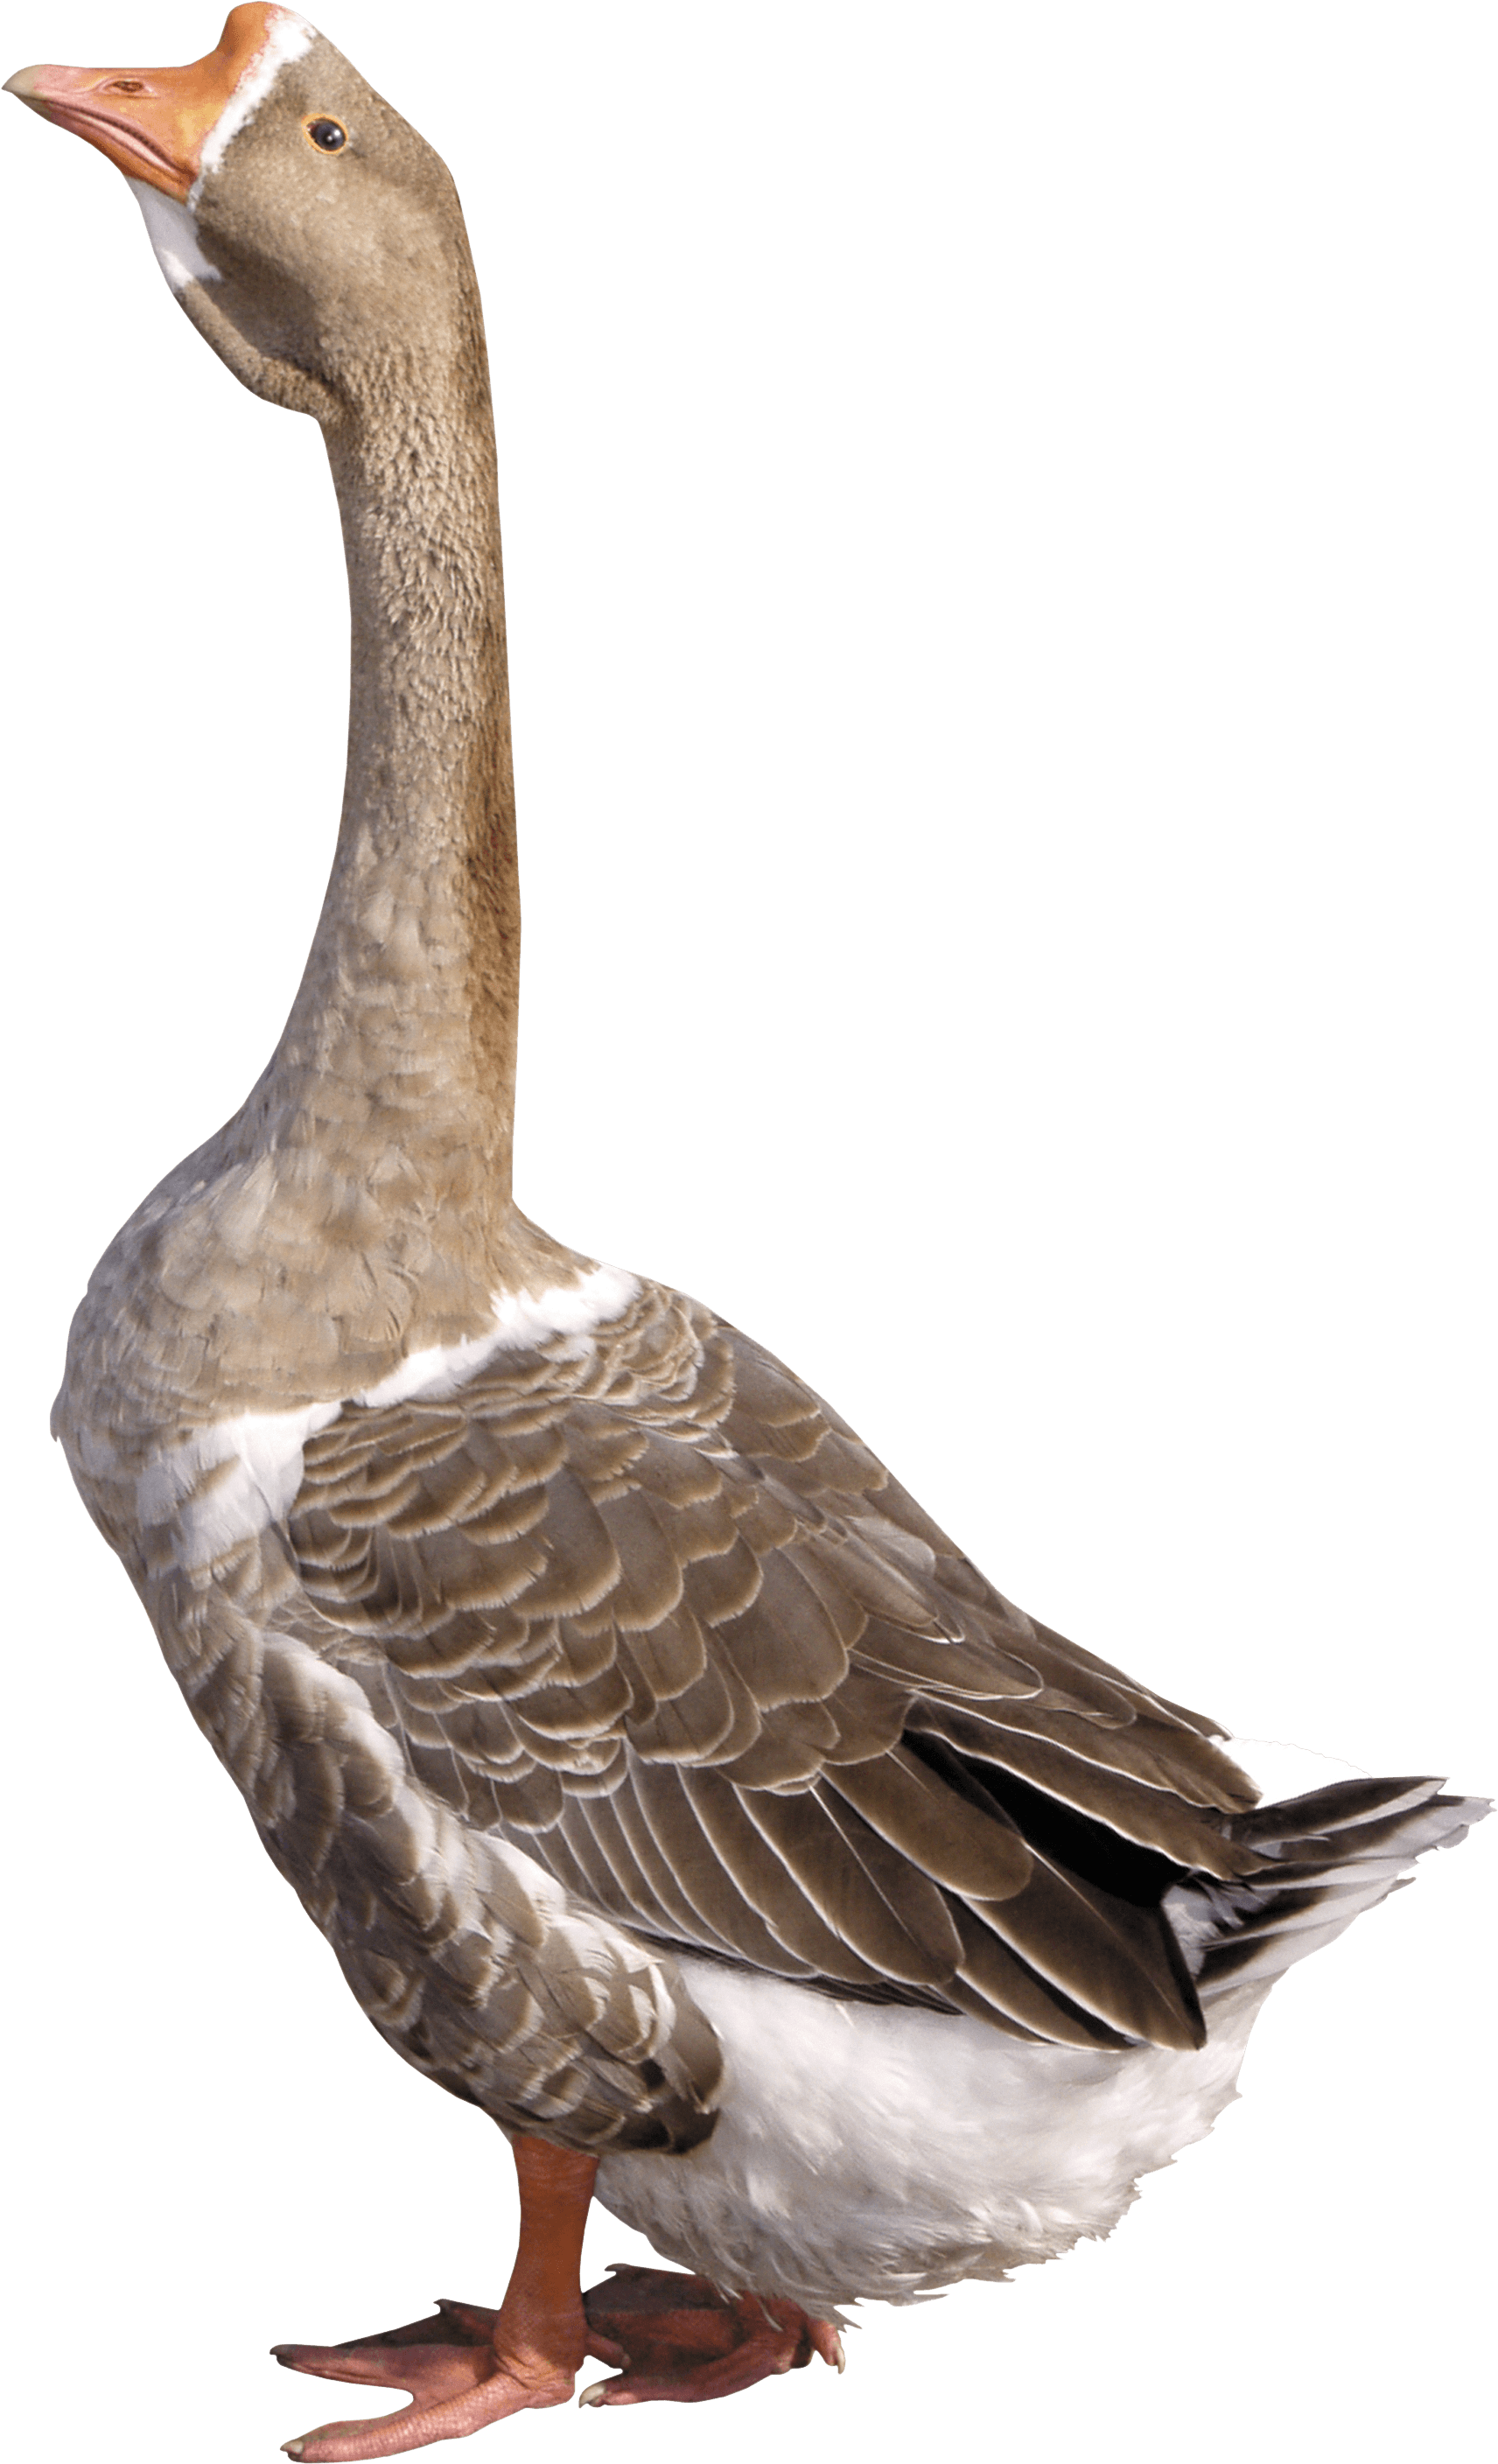 Goose Png Image PNG Image